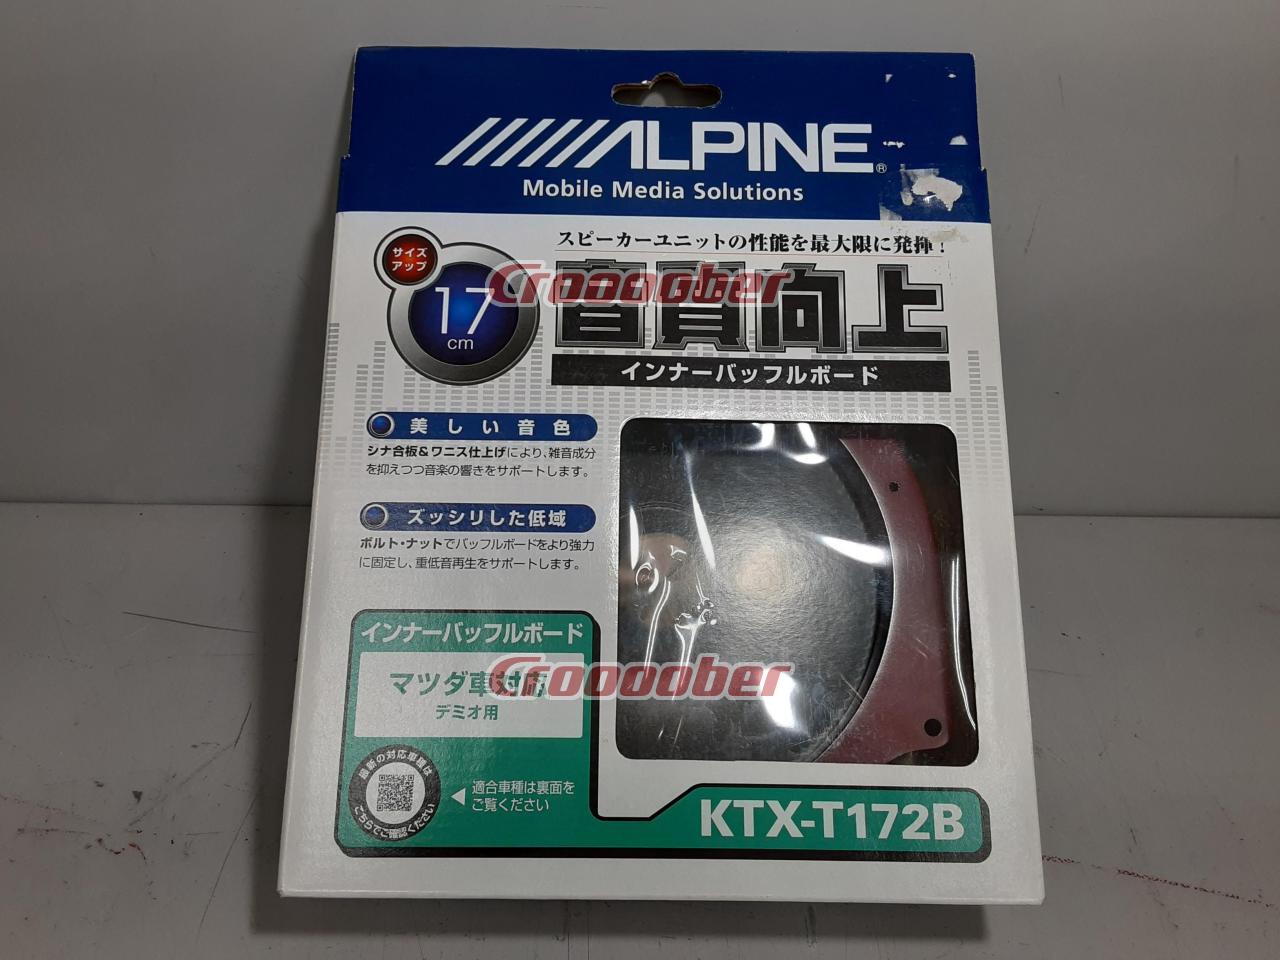 ALPINE(アルパイン) [KTX-T172B] マツダ用 17cmスピーカー 音質向上 